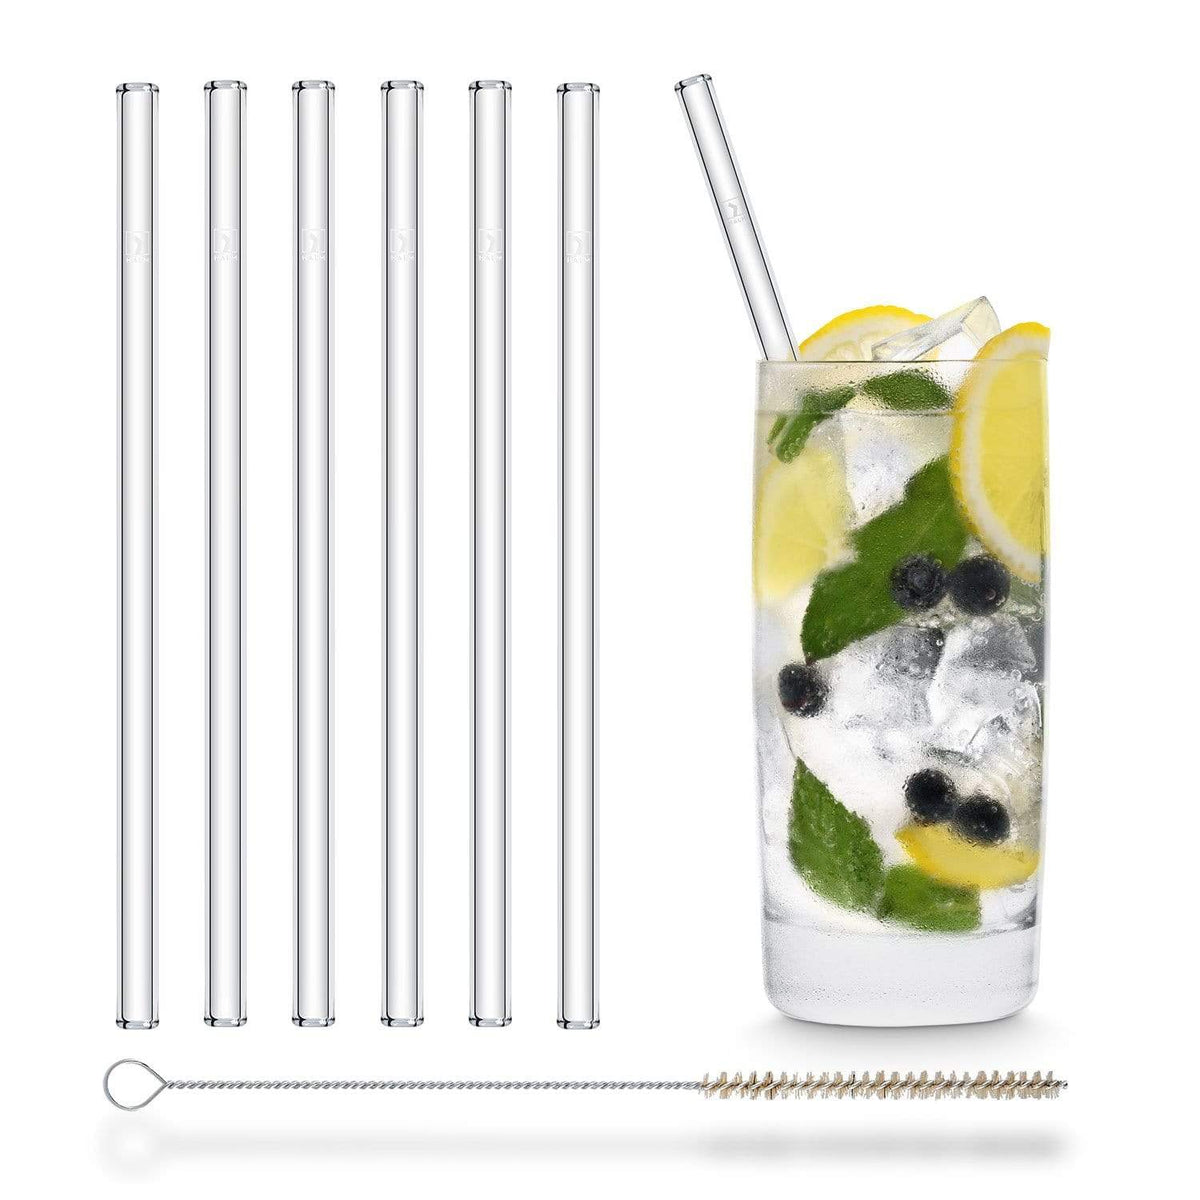 HALM glass straws 10 cm short straight - 6 pieces for B52 shot glasses -  HALM Straws